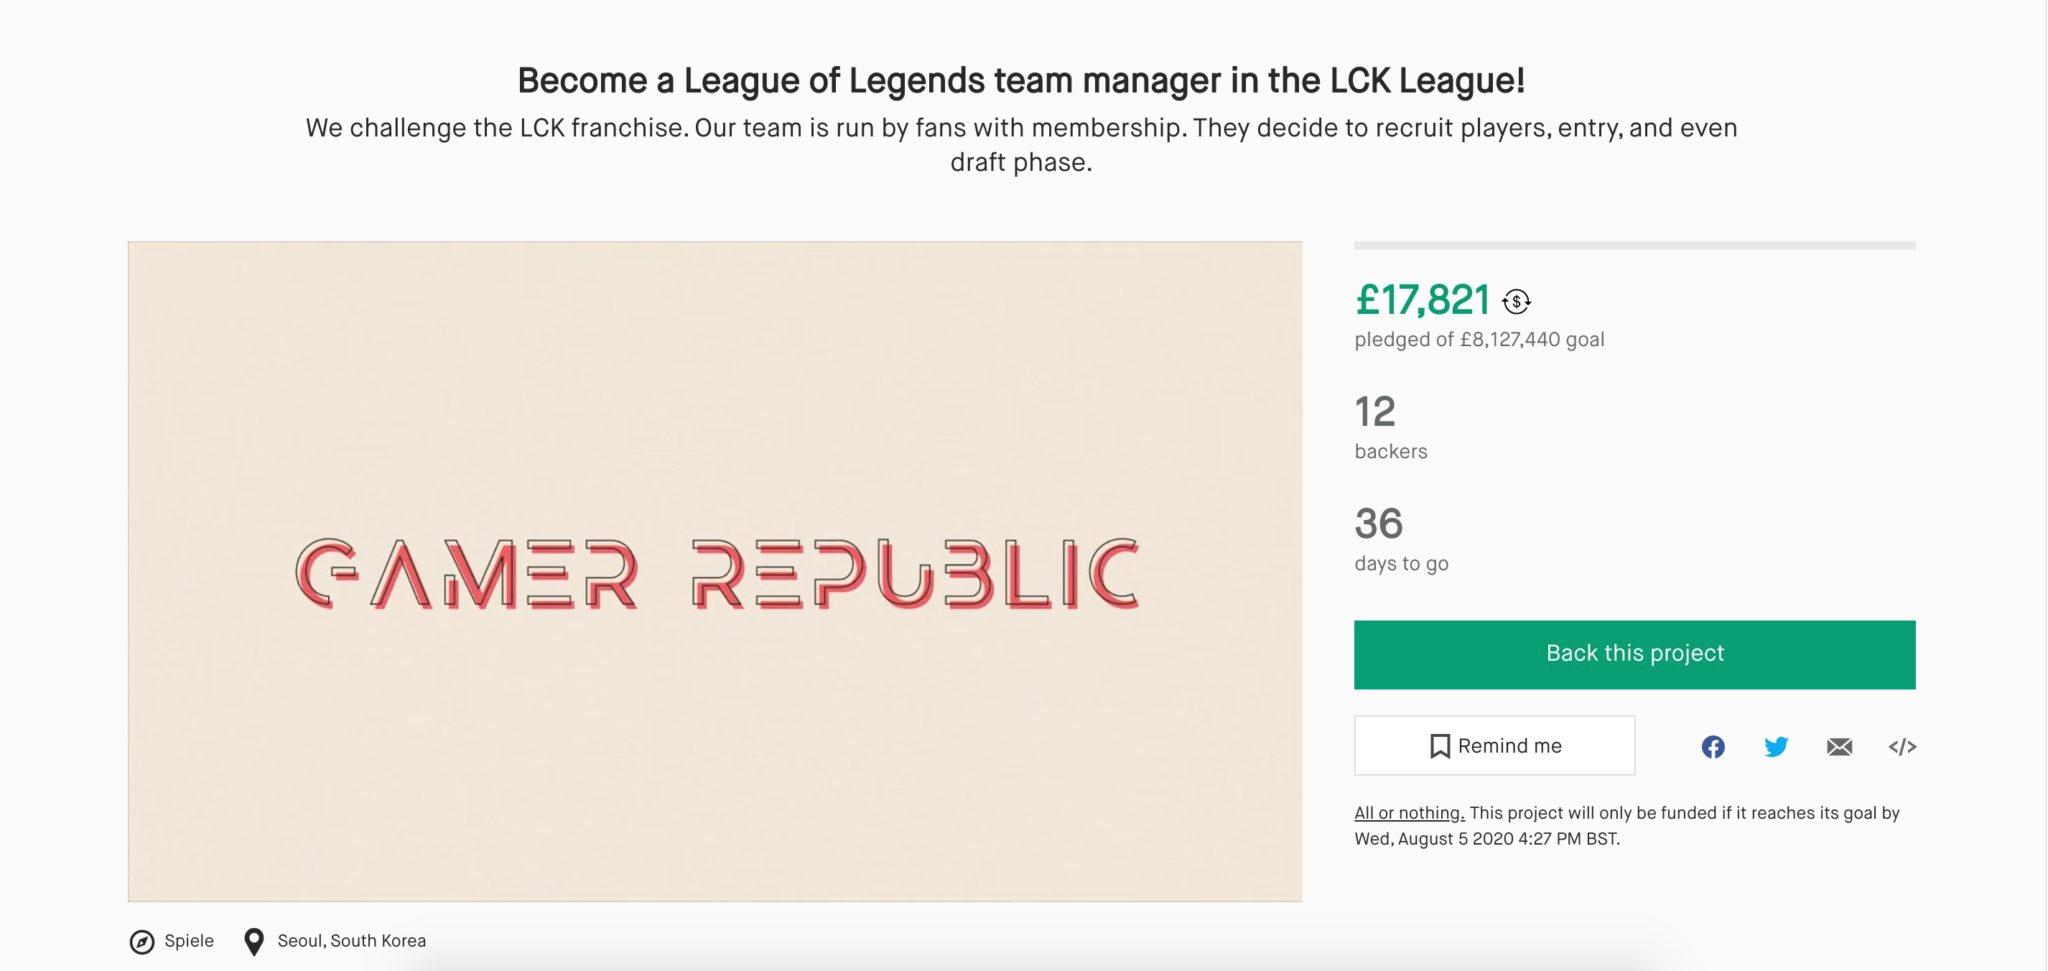 gamer republic kickstarter for $20m to join LCK